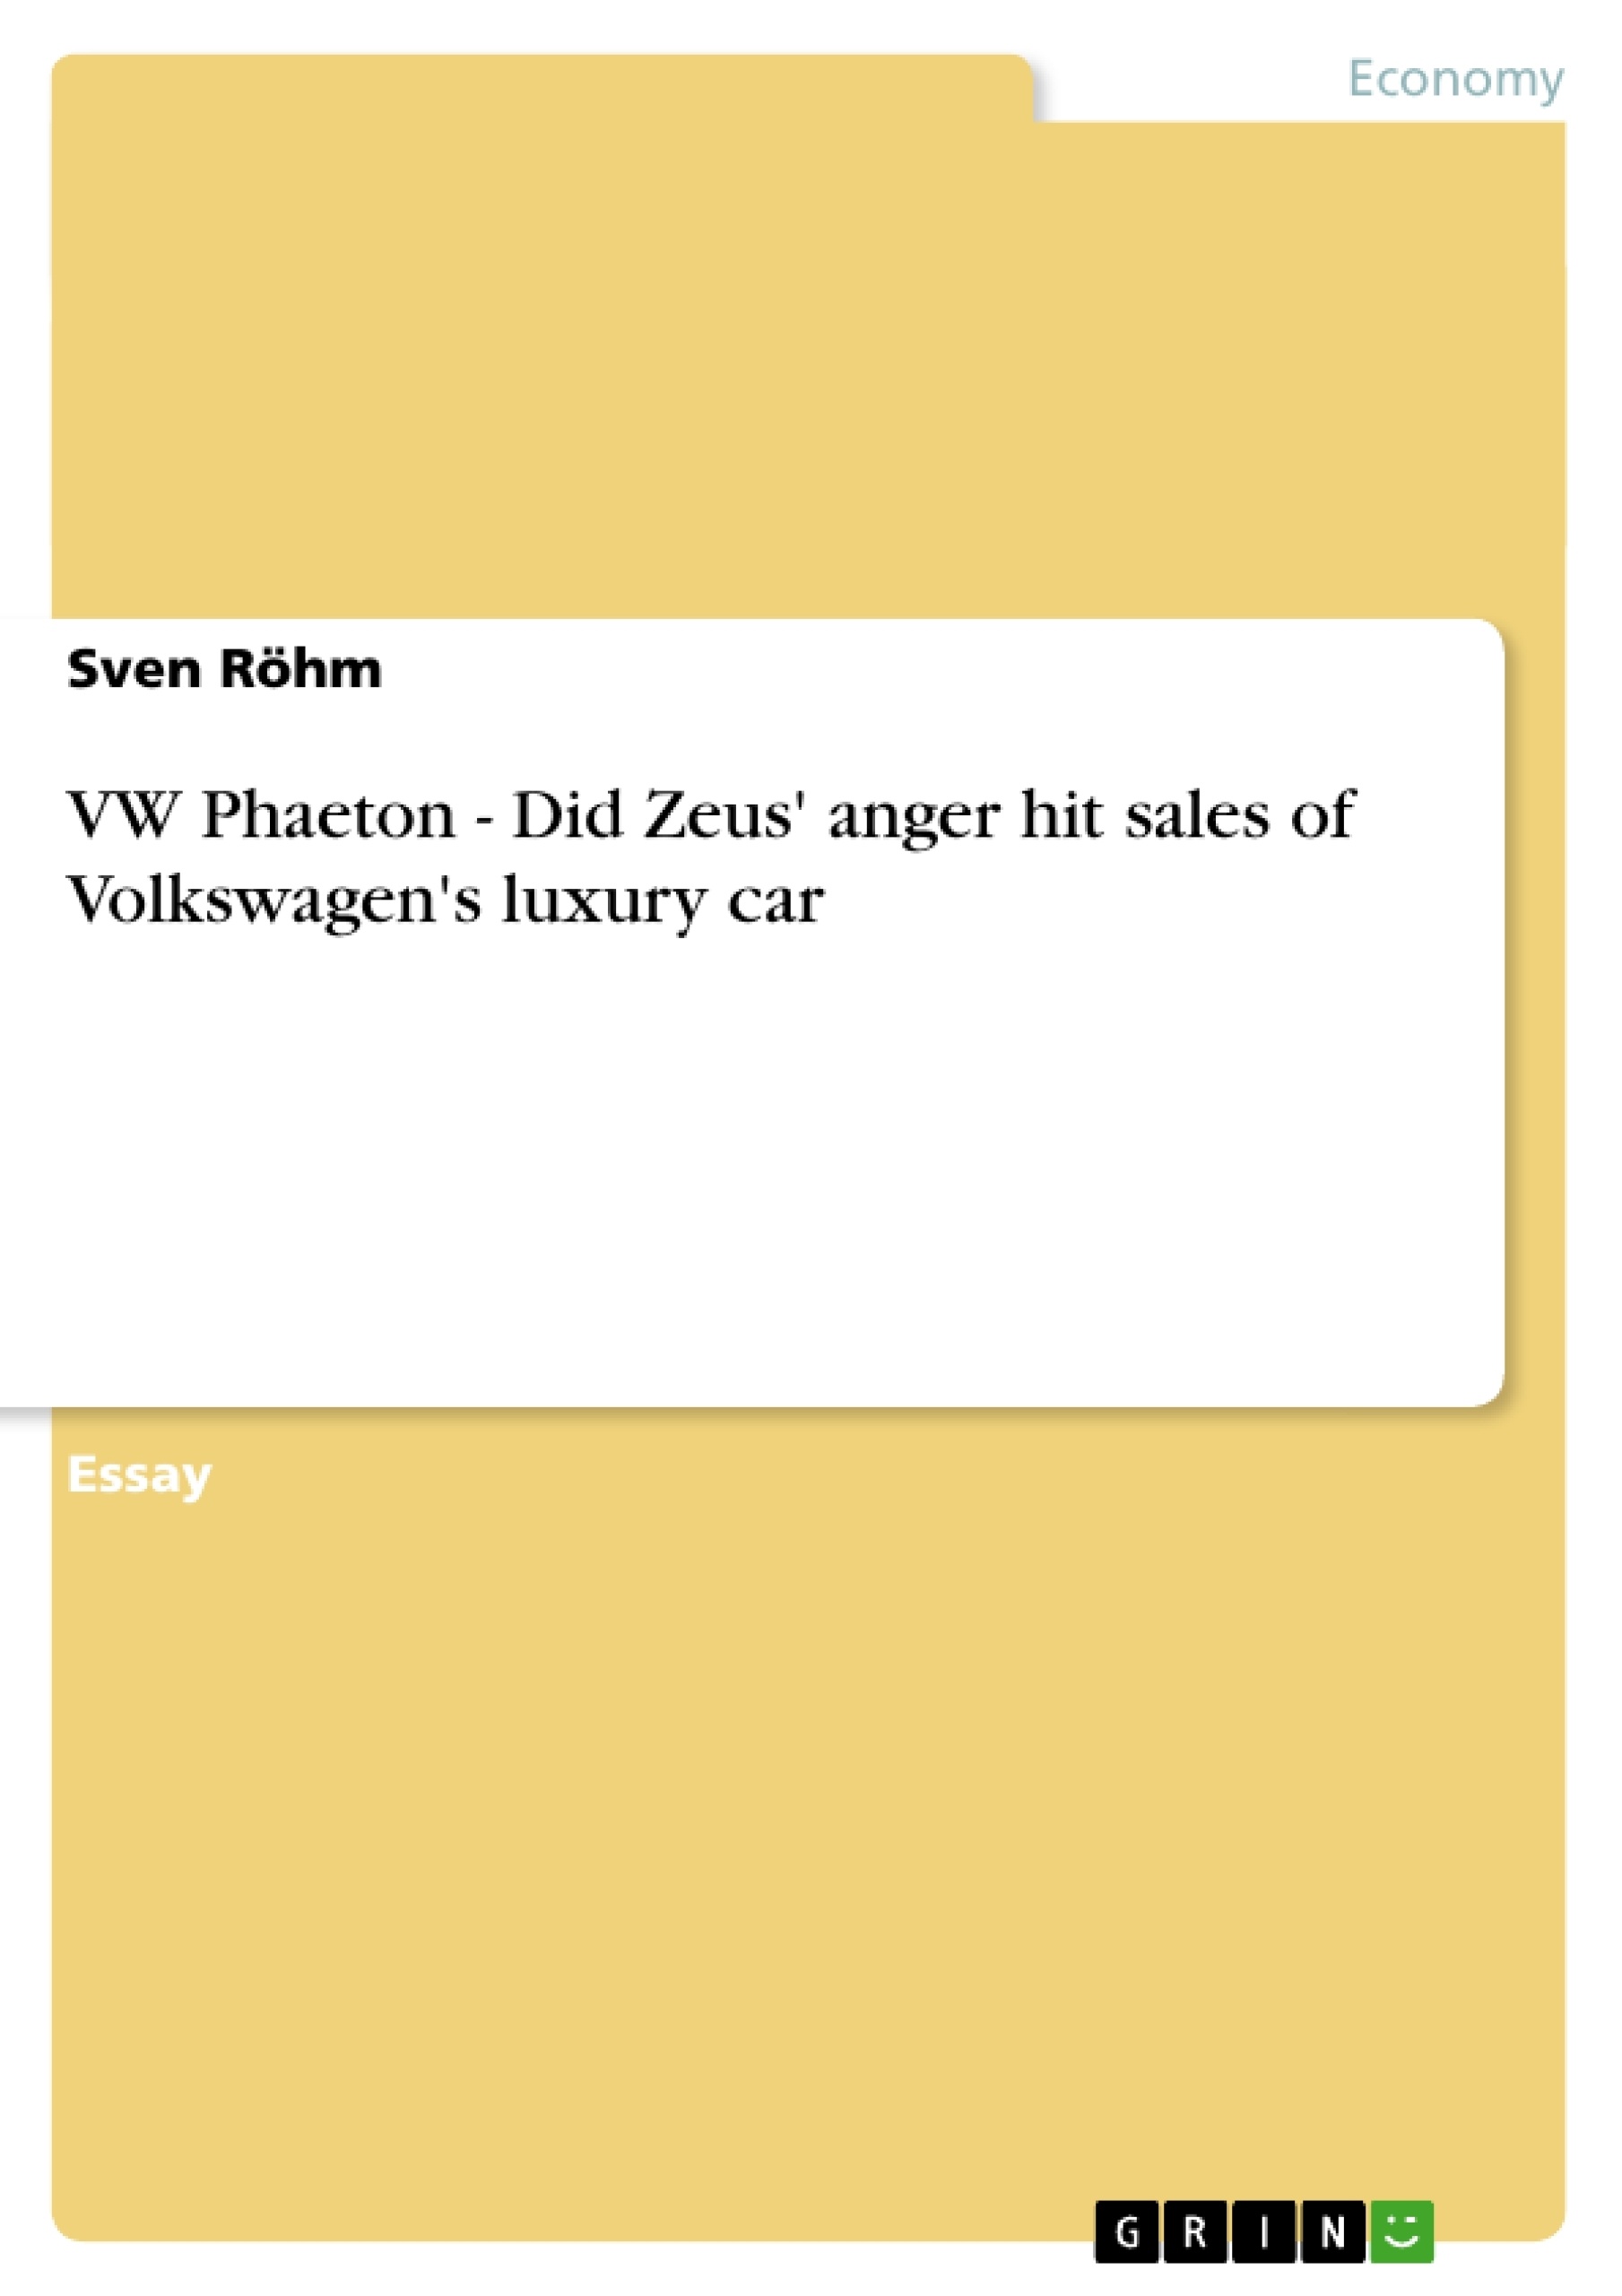 Title: VW Phaeton - Did Zeus' anger hit sales of Volkswagen's luxury car